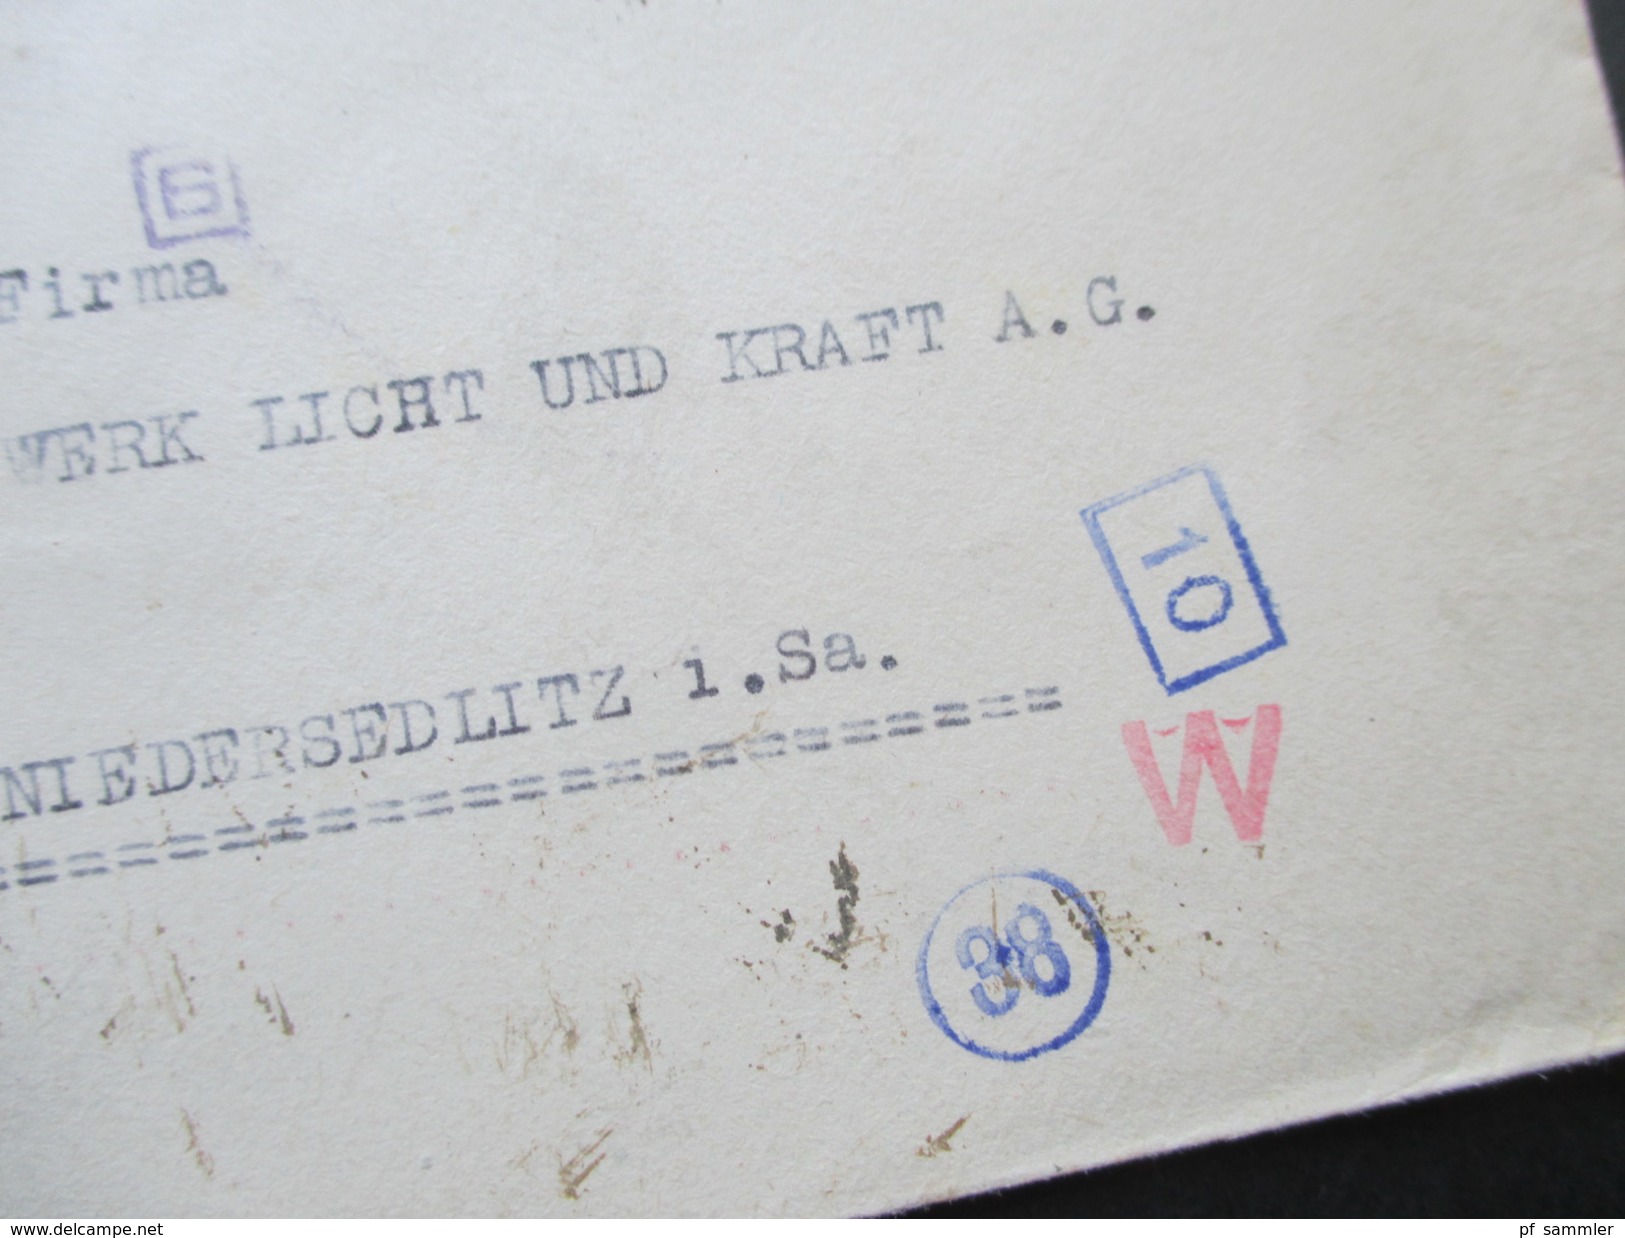 Italien 1942 Zensurpost  Viele Zensurstempel / Mehrfachzensur . OKW Wehrmacht / Verificato Per Censura Torino 16 Usw... - Oorlogspropaganda